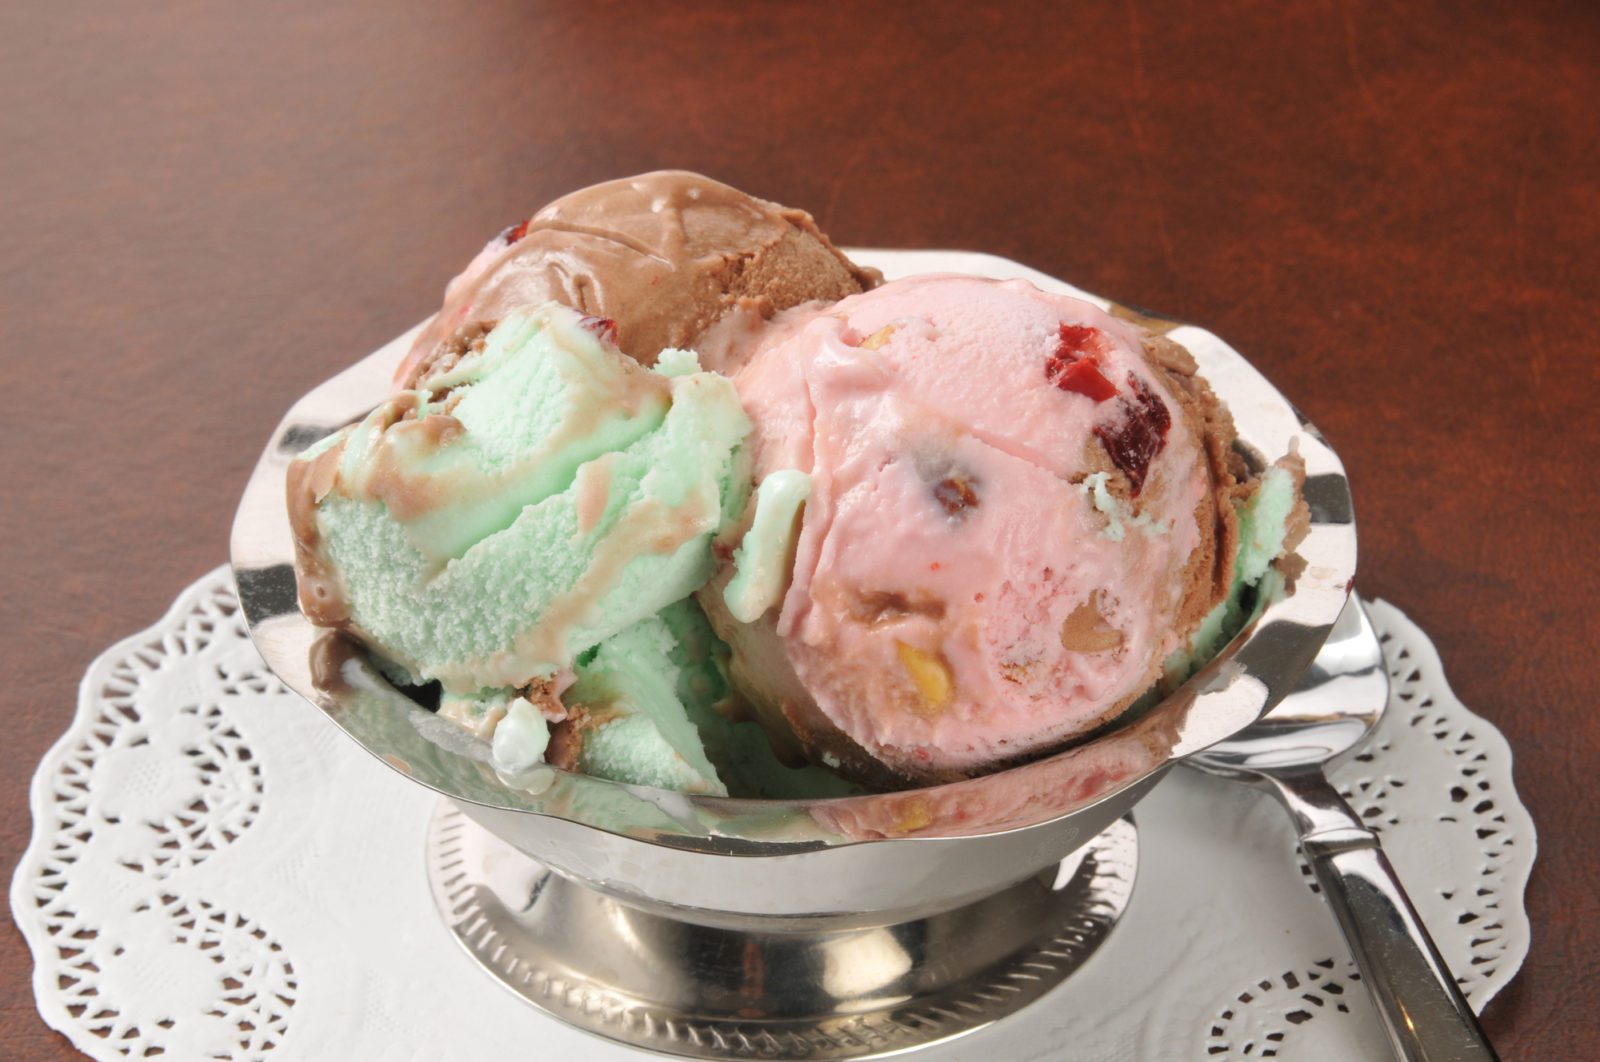 Exotic Ice Cream Flavors | Lapperts Palm Desert Ice Cream Flavors Pictures